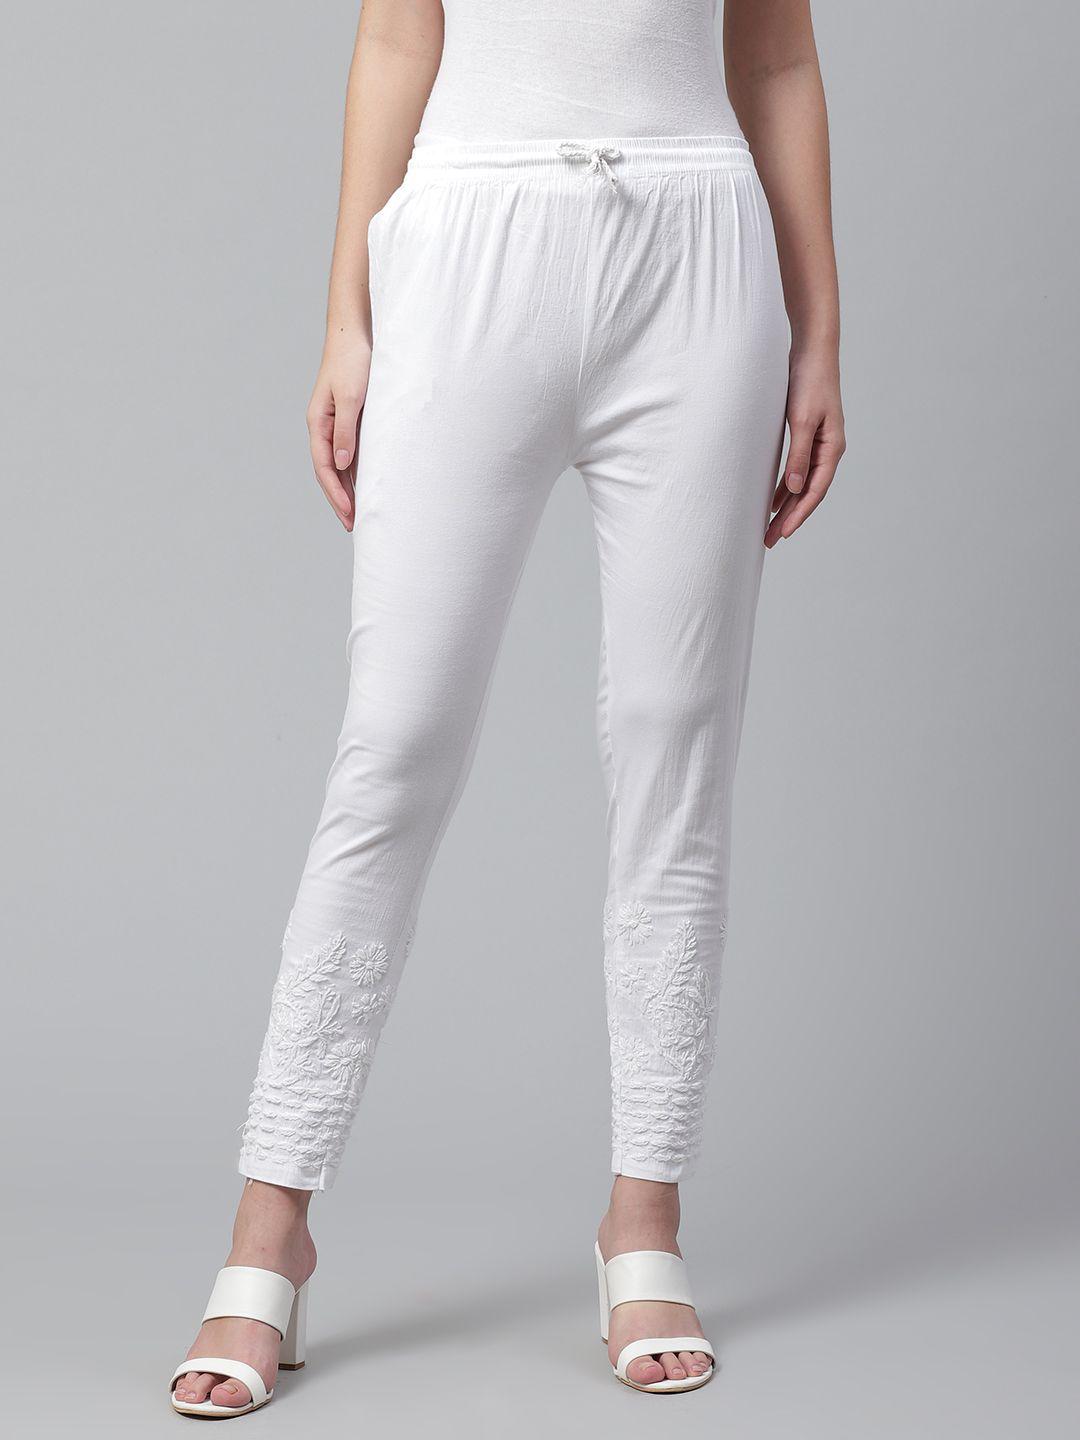 saadgi women white solid regular trousers